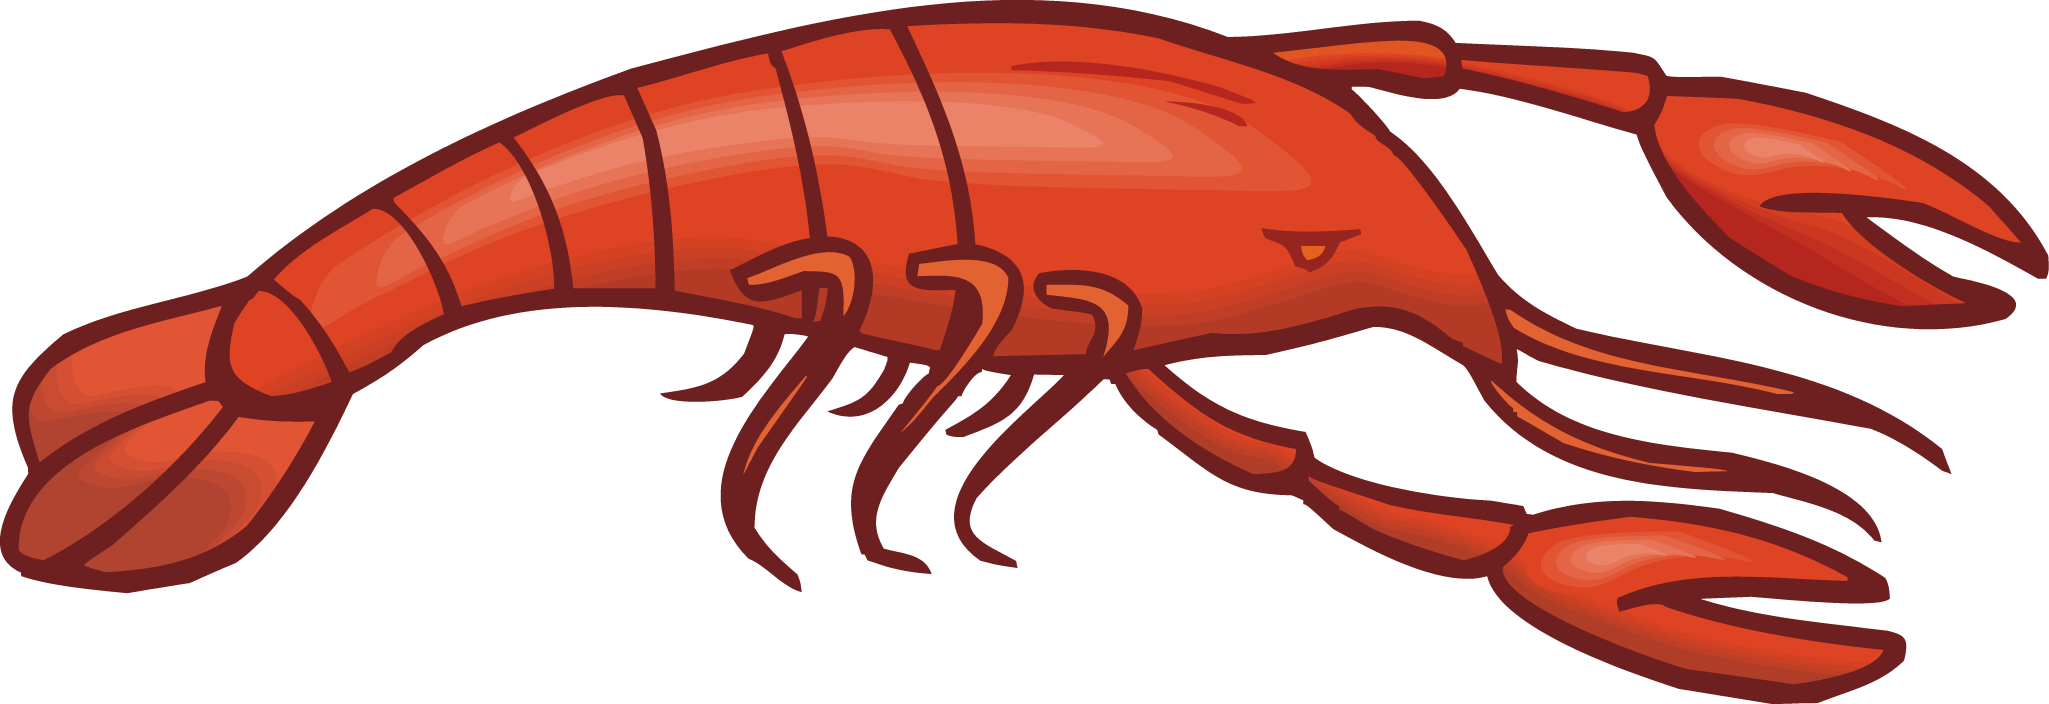 Crawfish Cray Cray Crayfish D